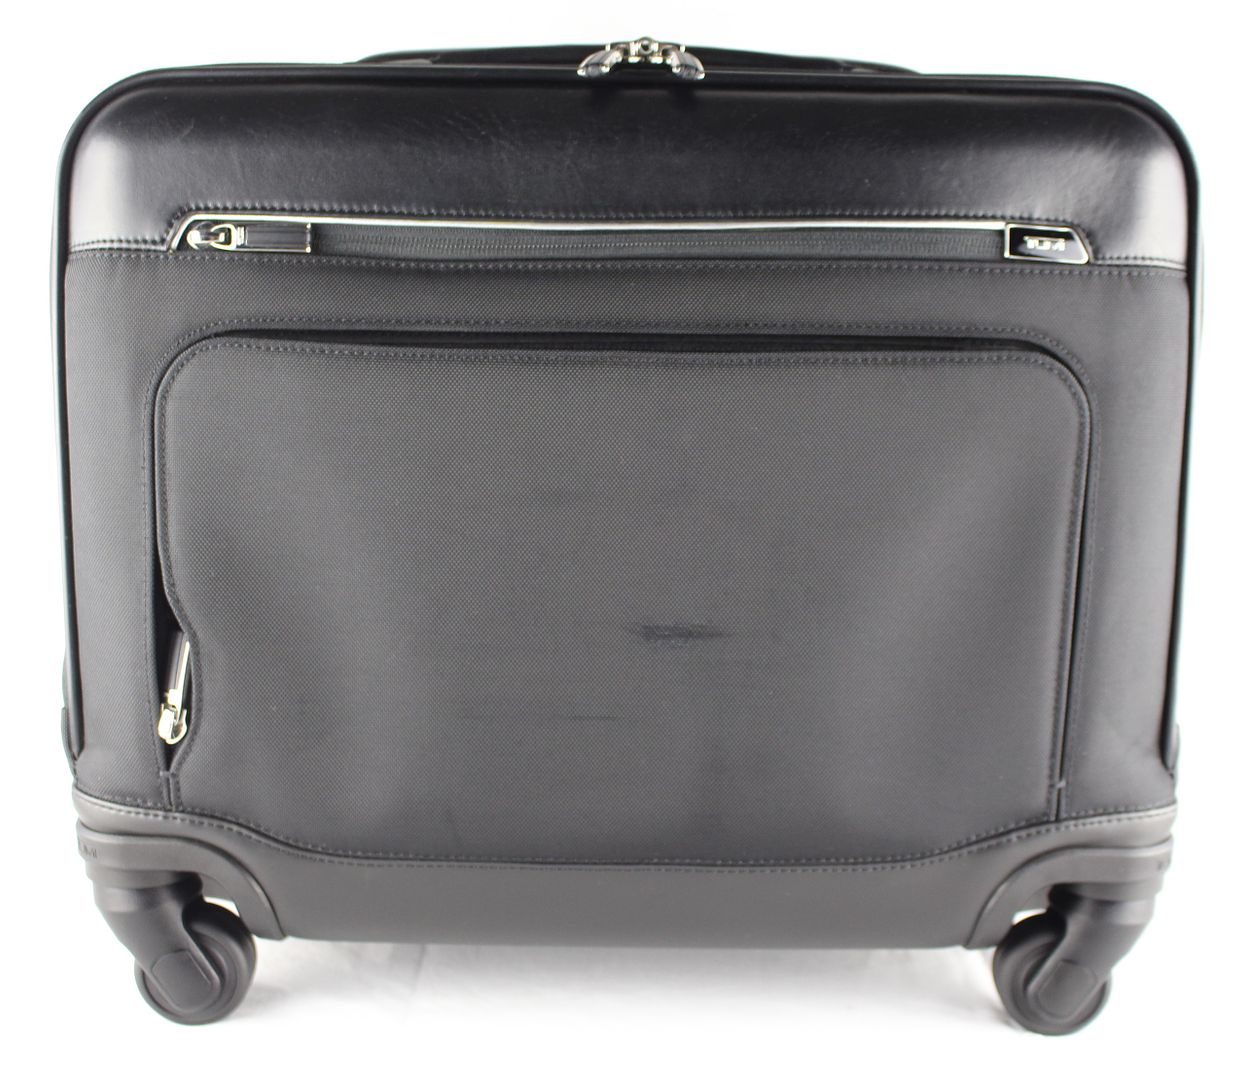 TUMI 'Arrive - McAllen' Black Nylon Wheeled Briefcase - 255663D2 | eBay